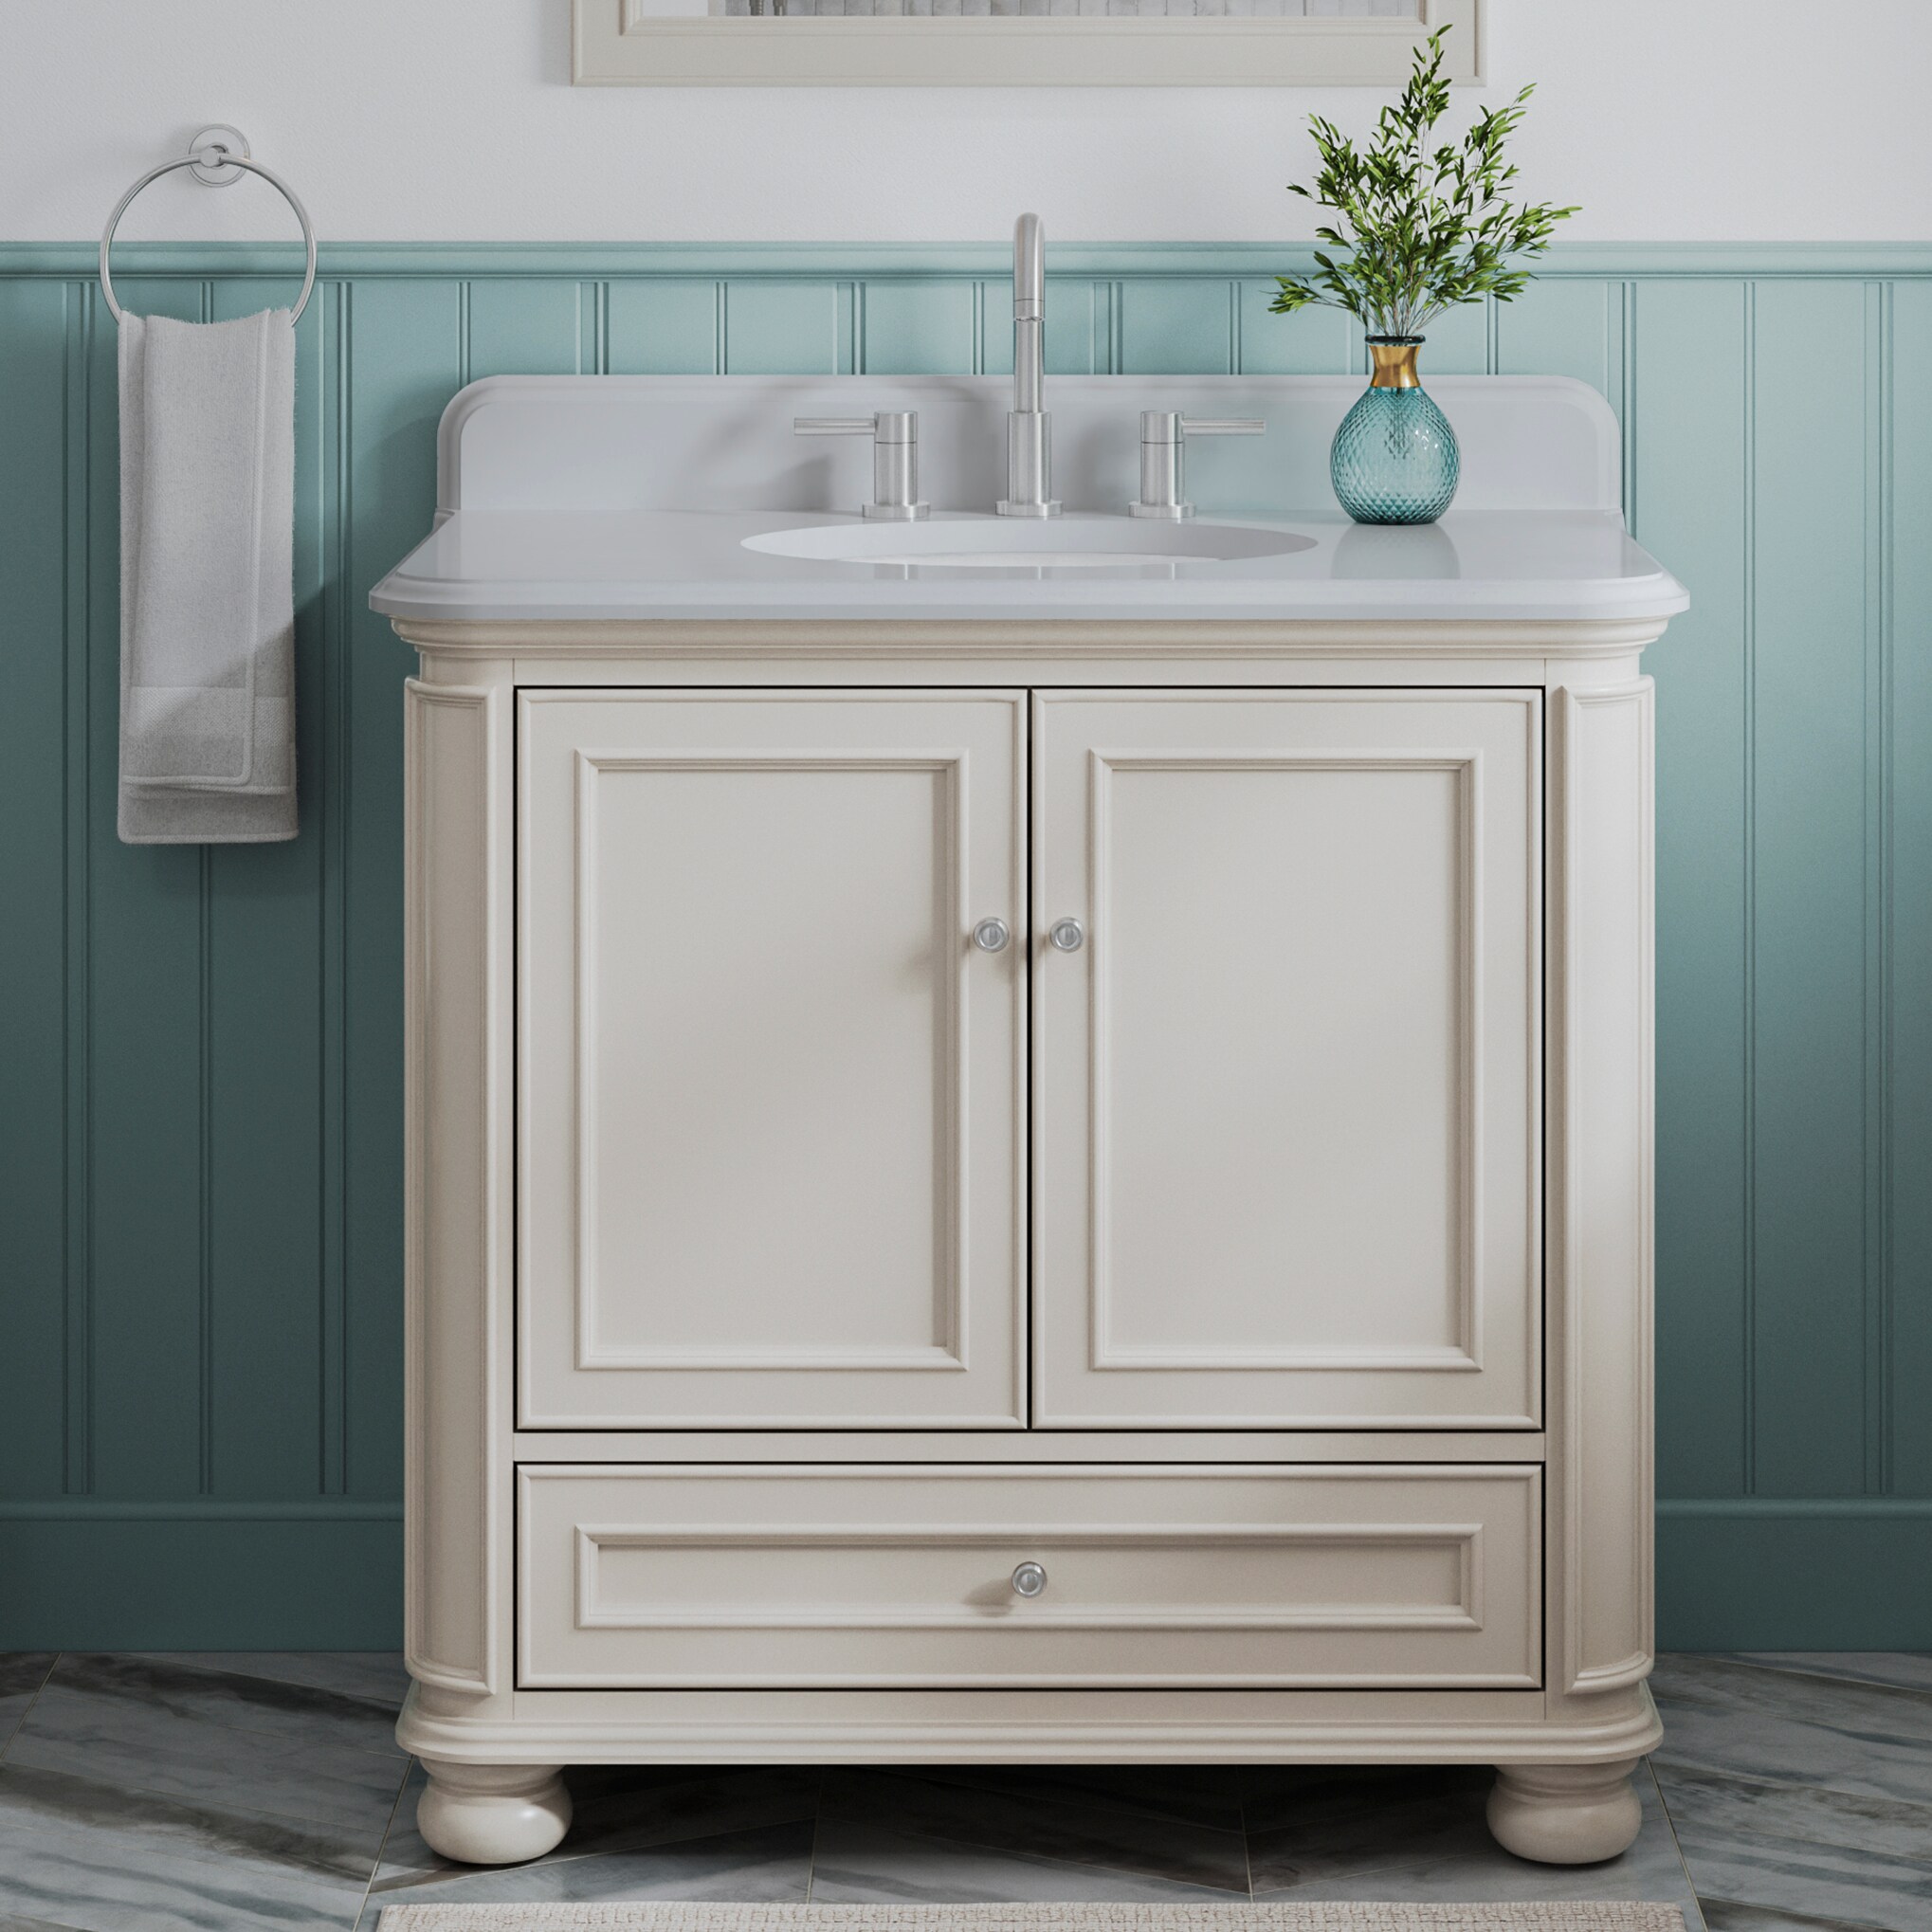 Wrightsville 36-in Flaxen Undermount Single Sink Bathroom Vanity with White Engineered Stone Top in Brown | - allen + roth 1116VA-36-320-901